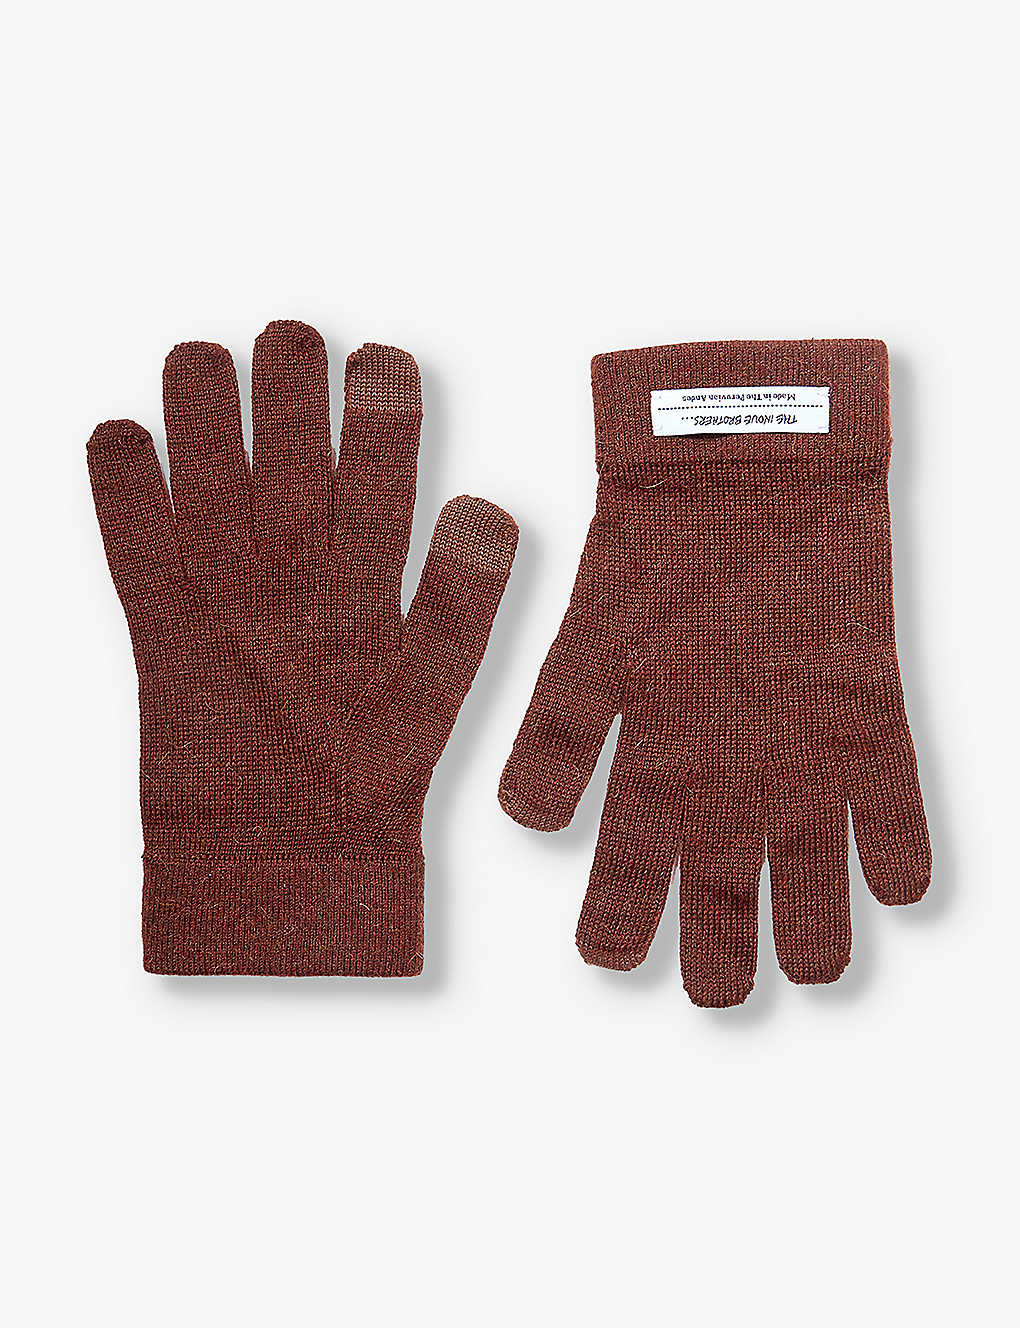 The Inoue Brothers Mens Melange Brown Brand-embellished Wool-blend Gloves